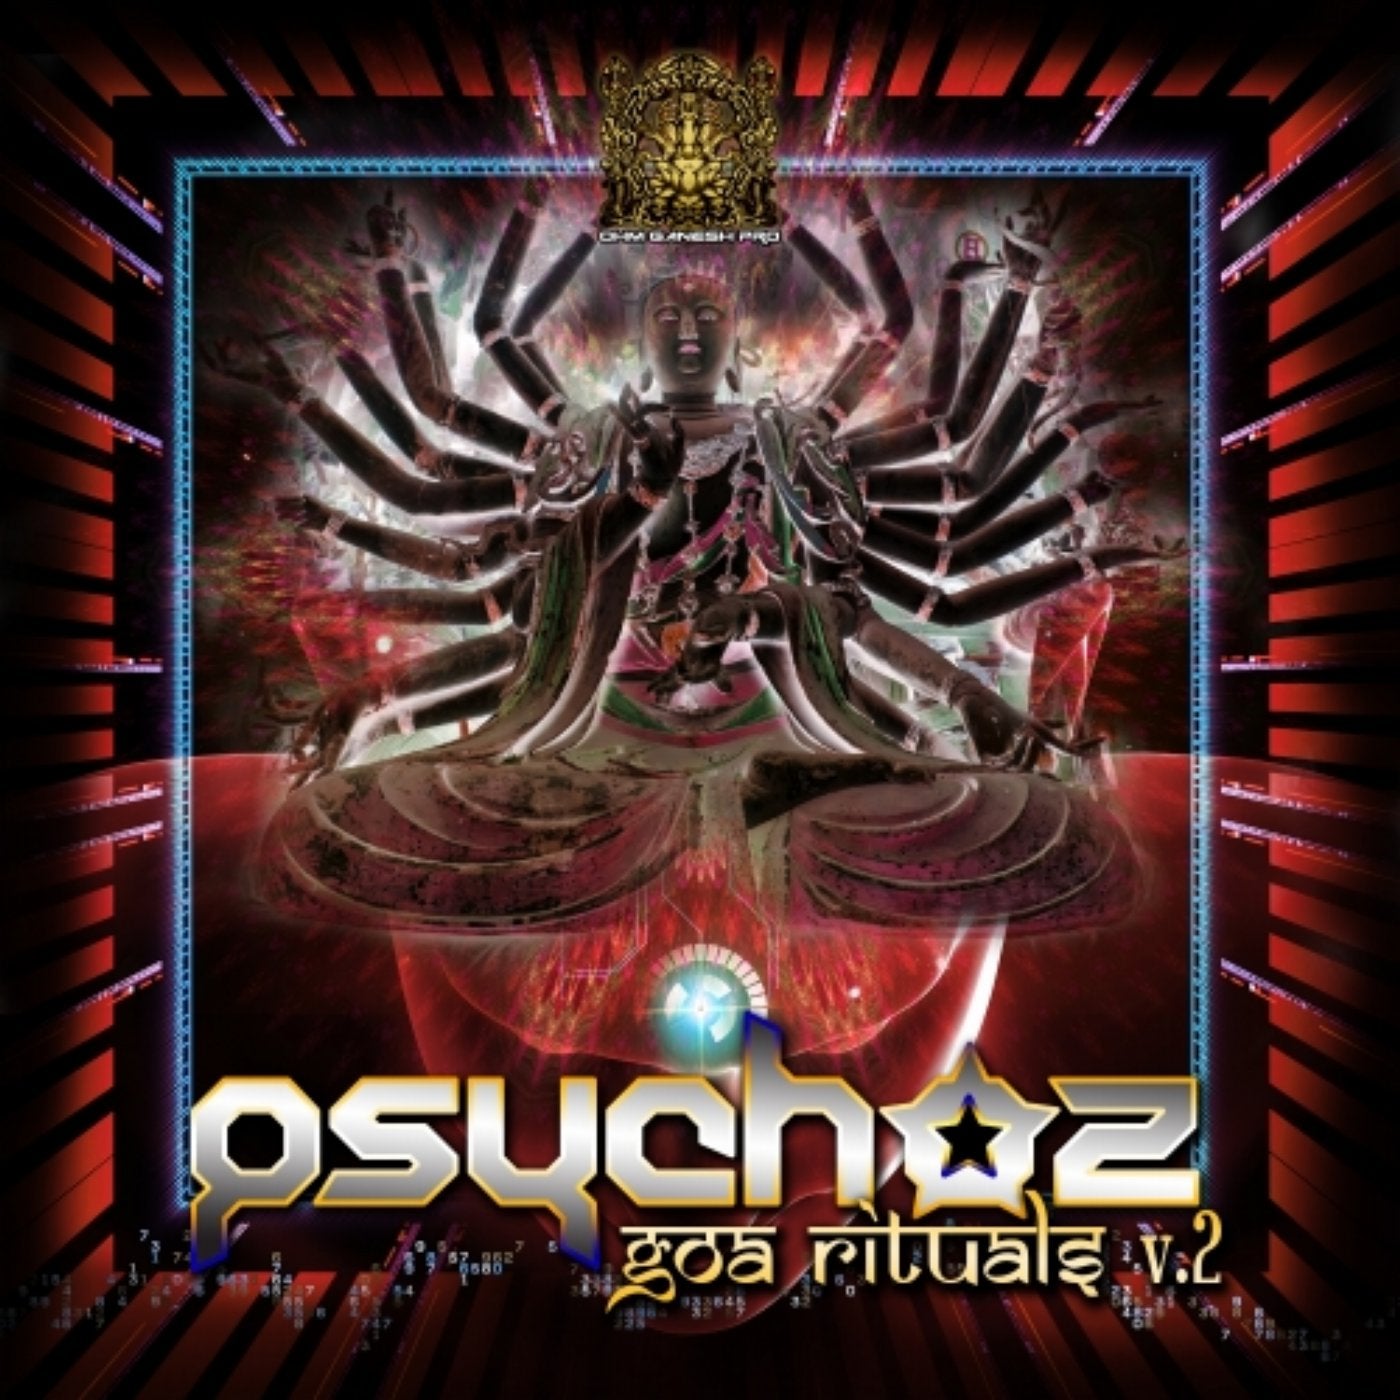 Psychoz - Goa Rituals Volume 2